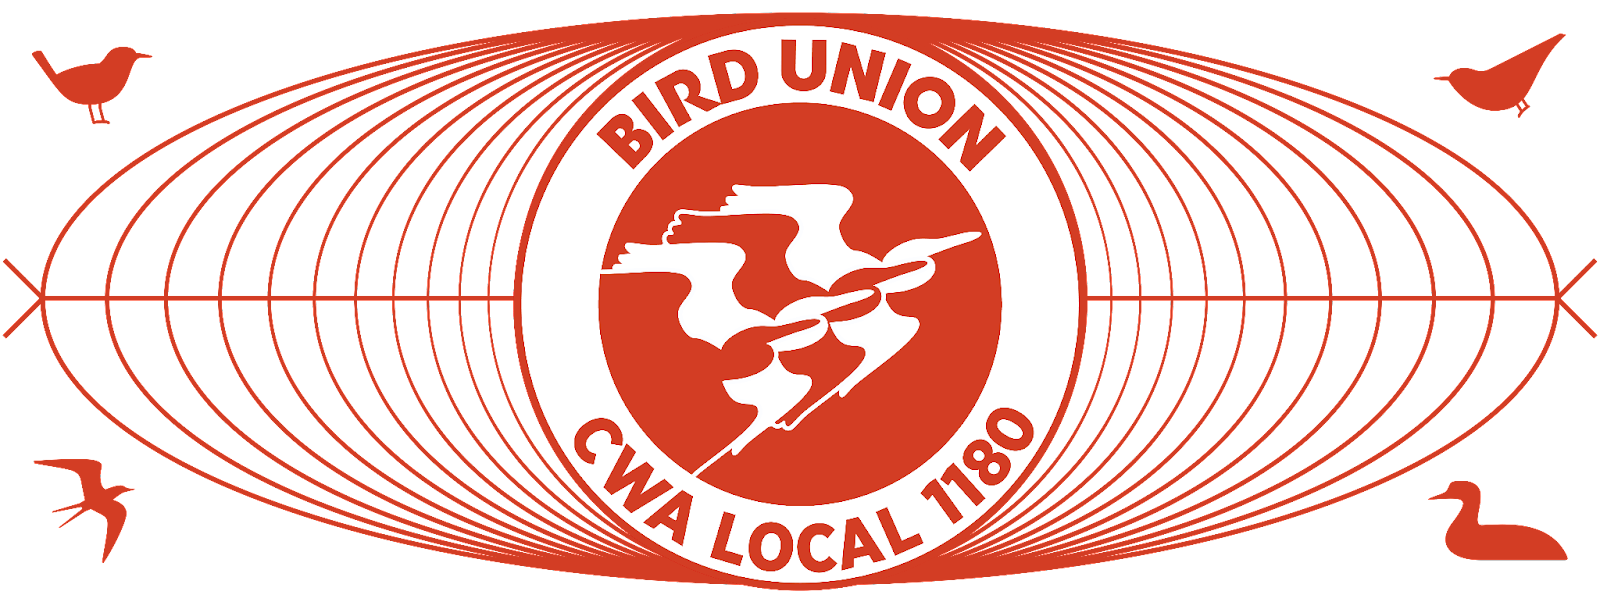 Bird Union CWA Local 1180